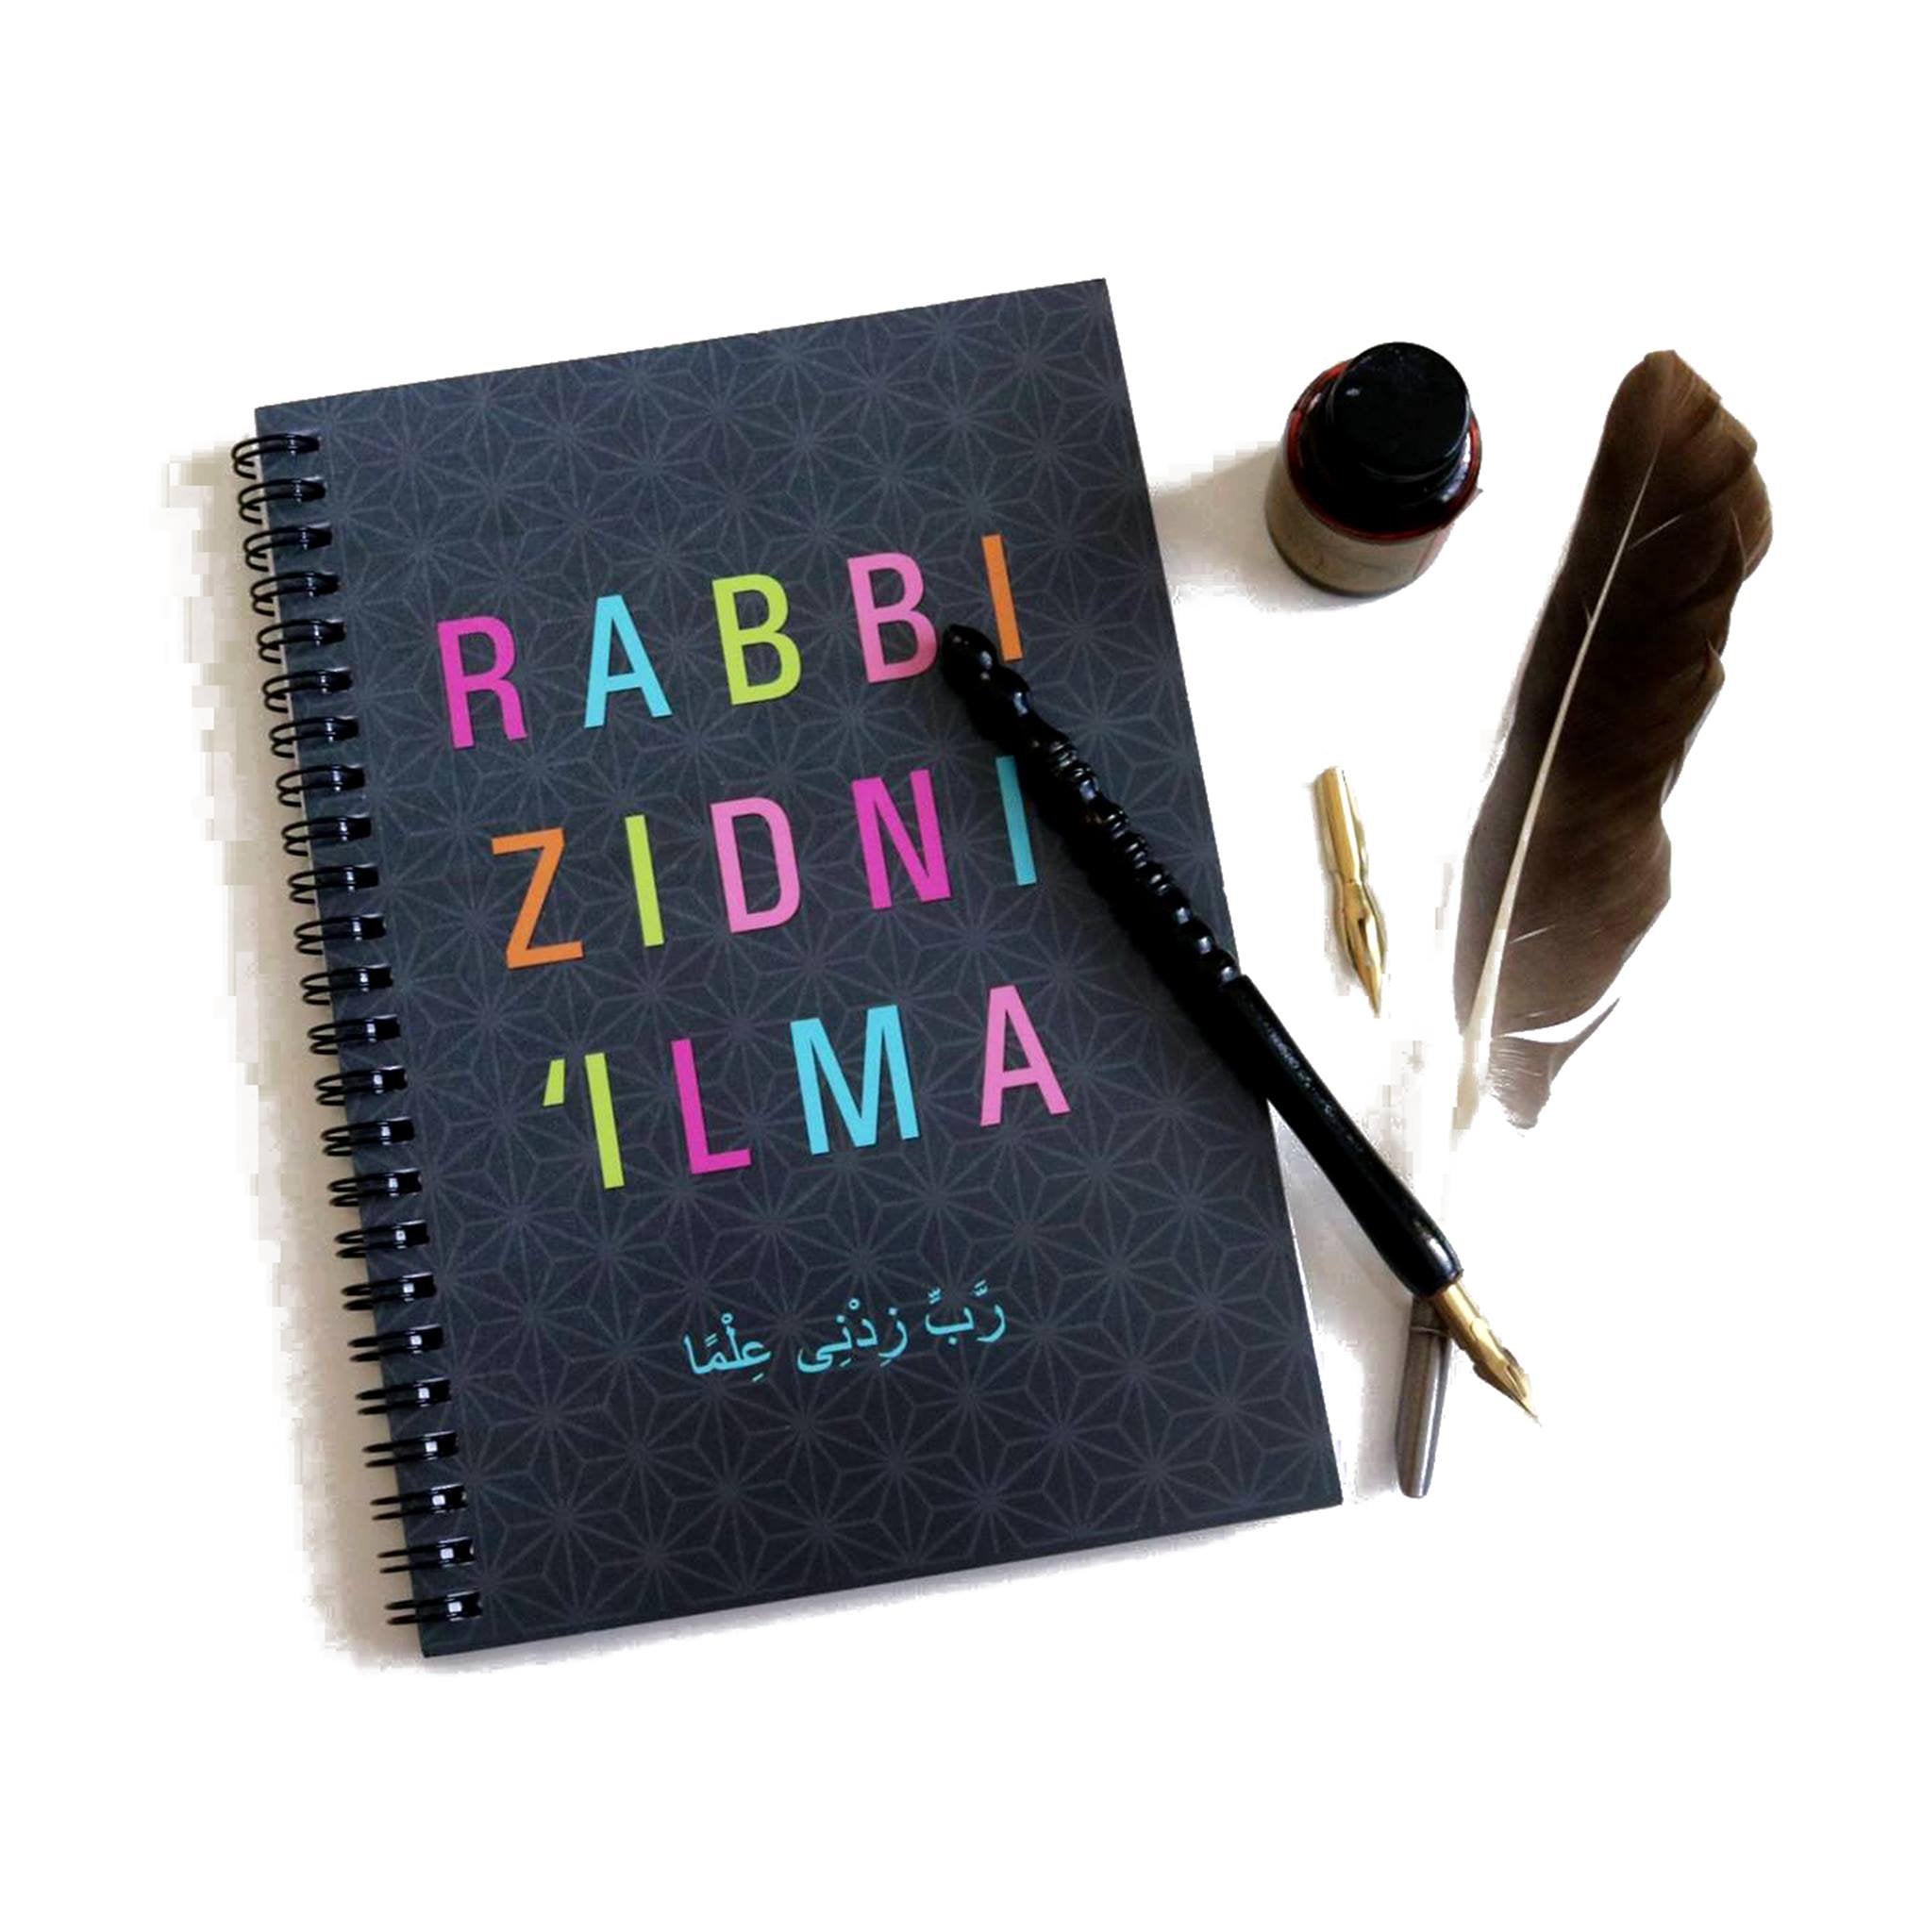 Rabbi Zidni 'Ilma (with English & Arabic) Notebook